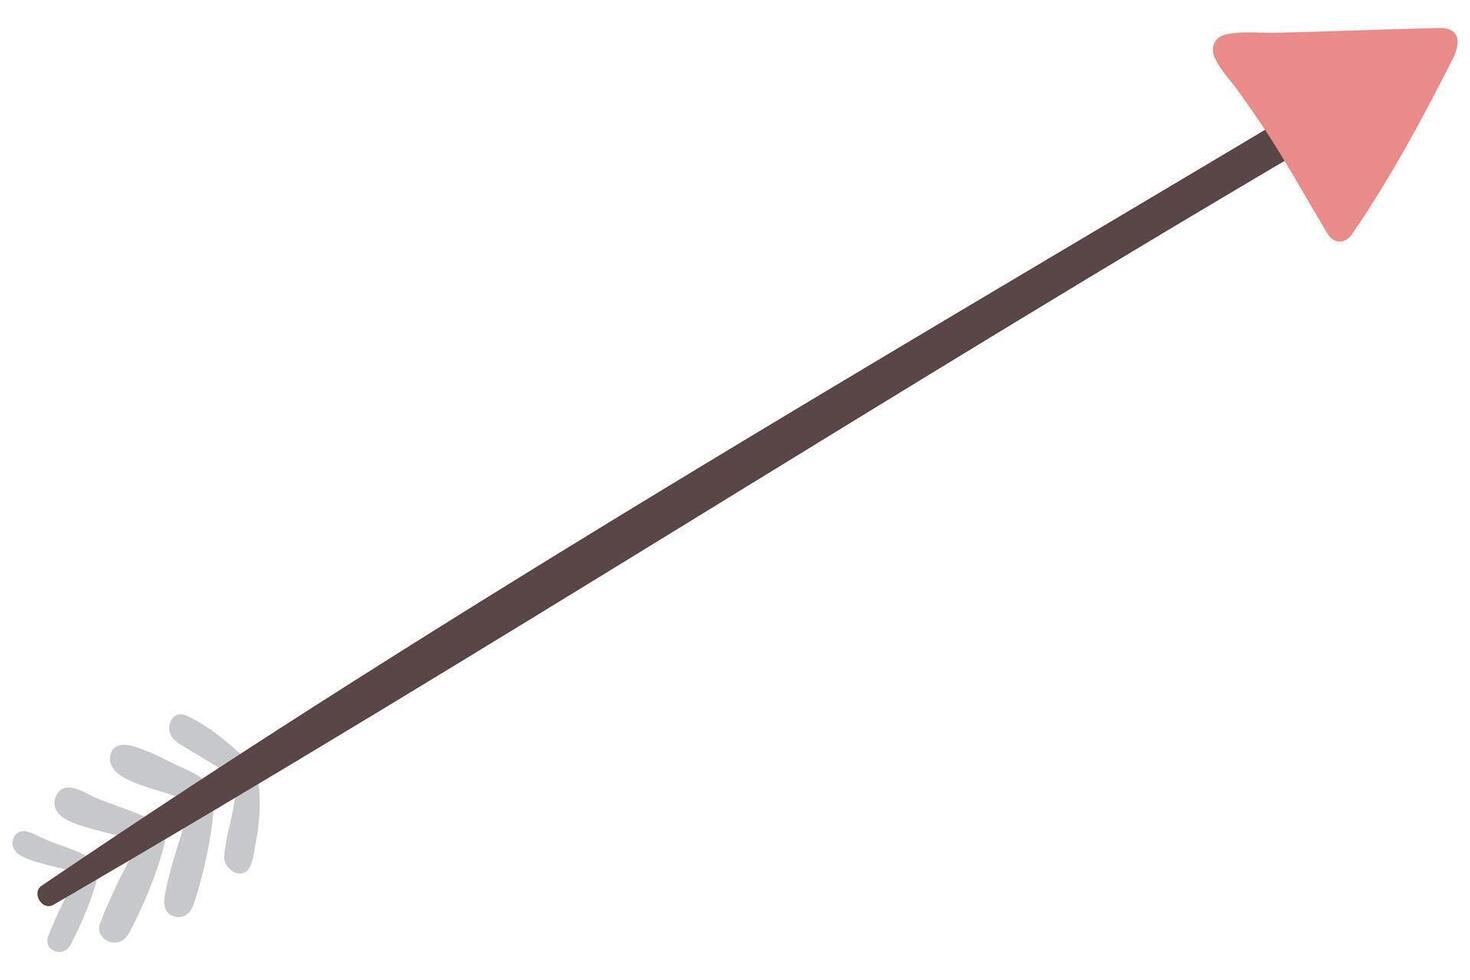 plano ilustración flecha dibujos animados aislado en blanco antecedentes. vector